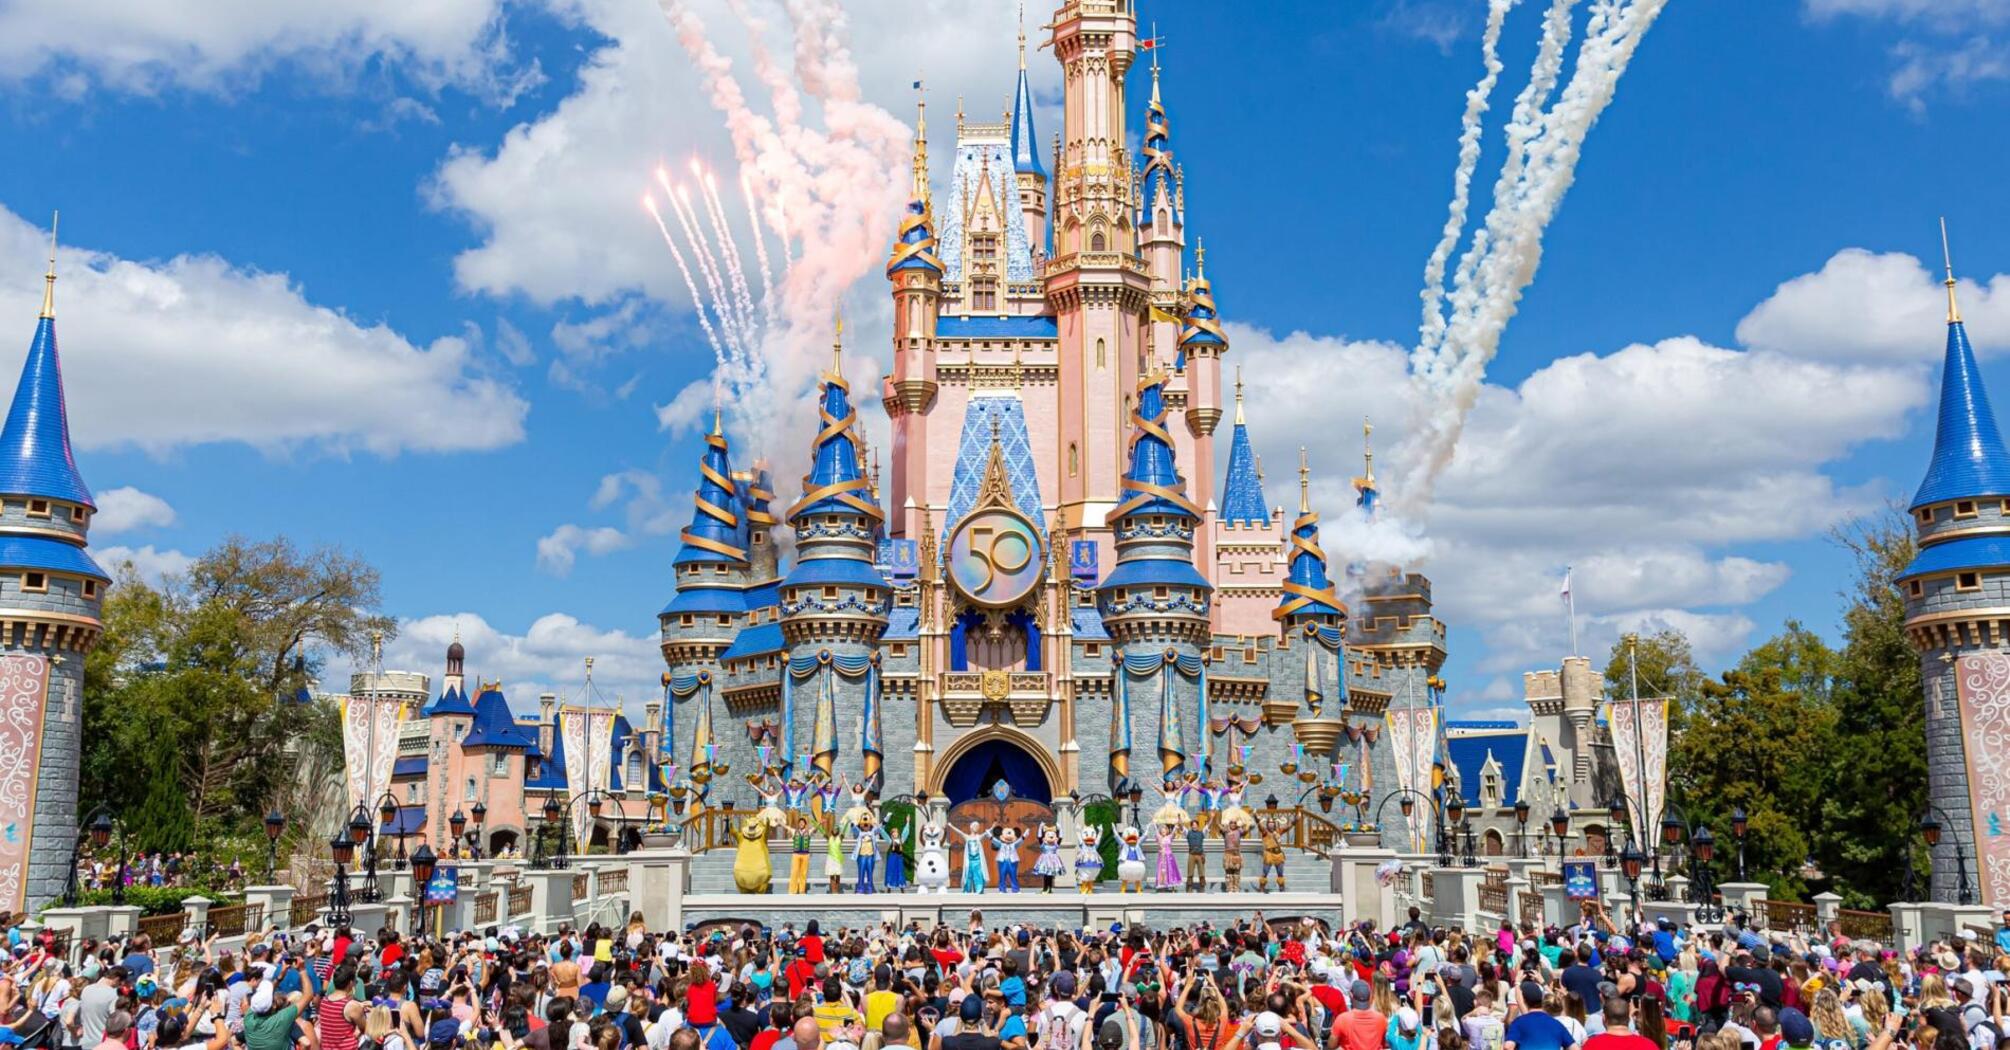 The fairy tale world of Disney World